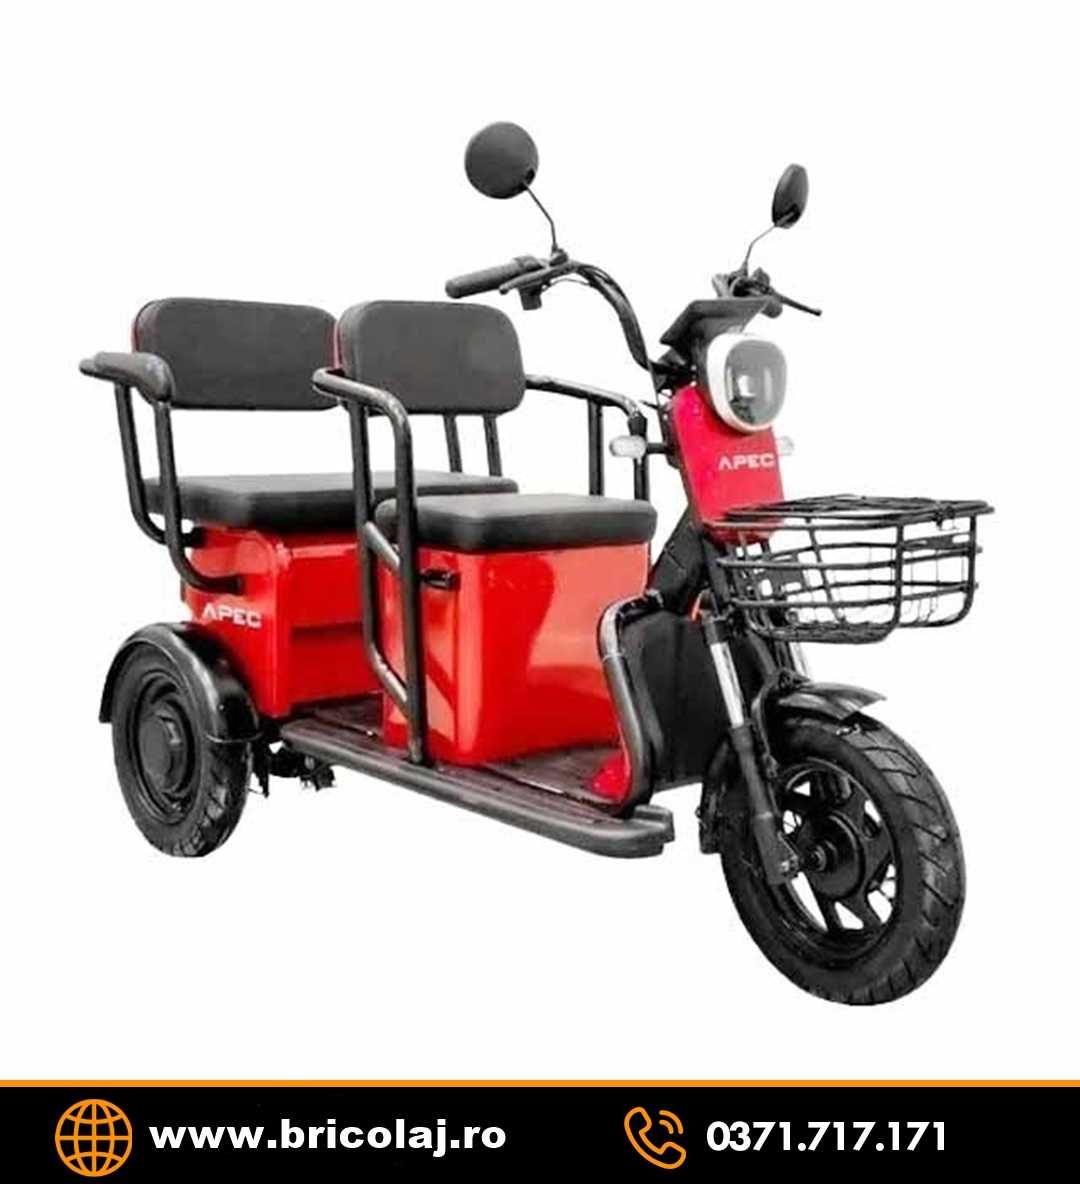 Tricicleta electrica Volta APM5, Motor 1000W, Rosu, fara permis